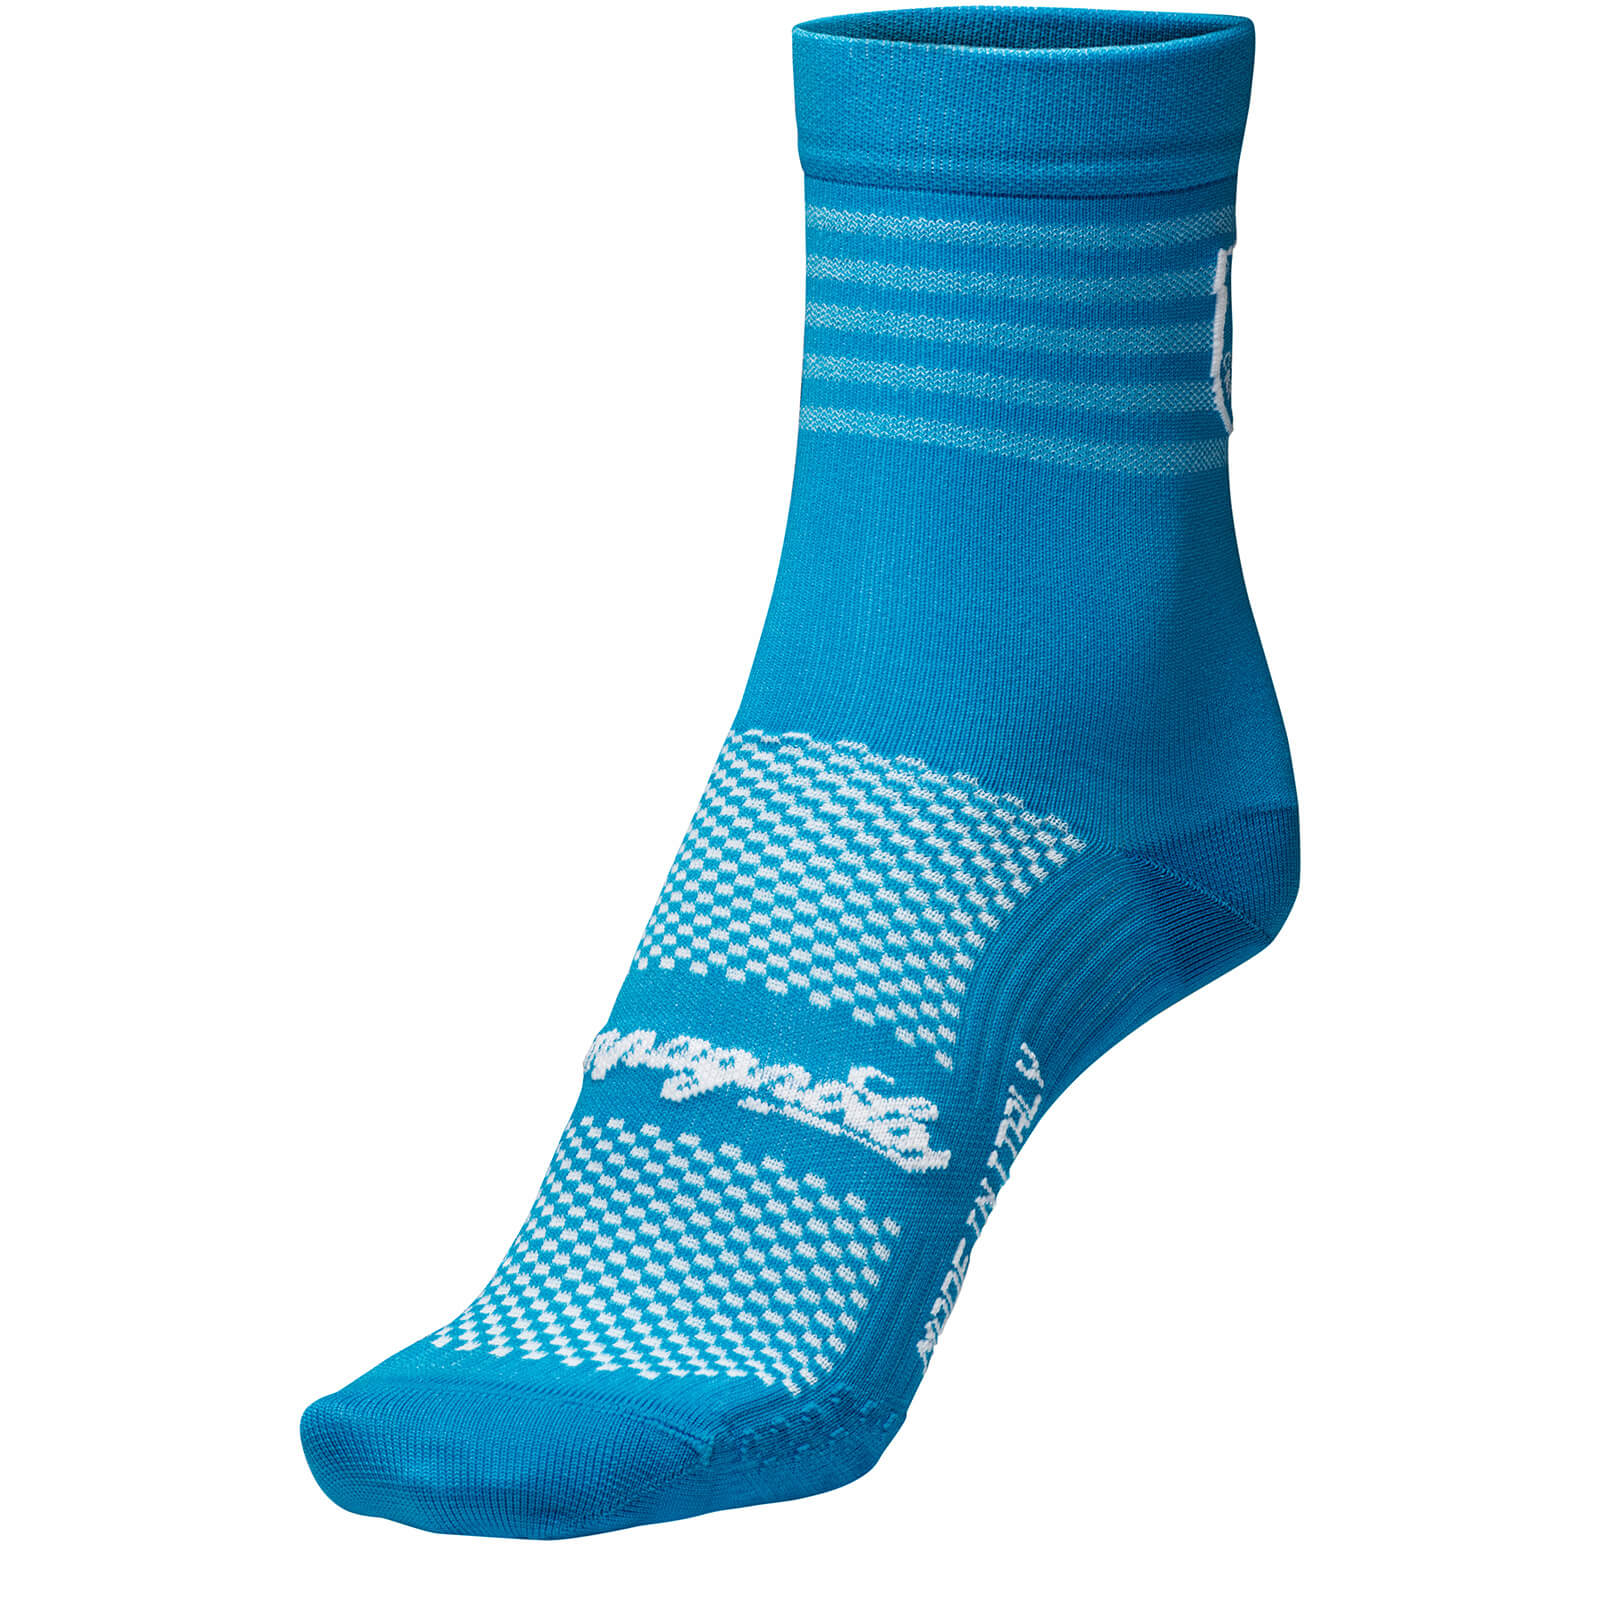 Nalini Campagnolo Litech Socks - L/XL - Light Blue